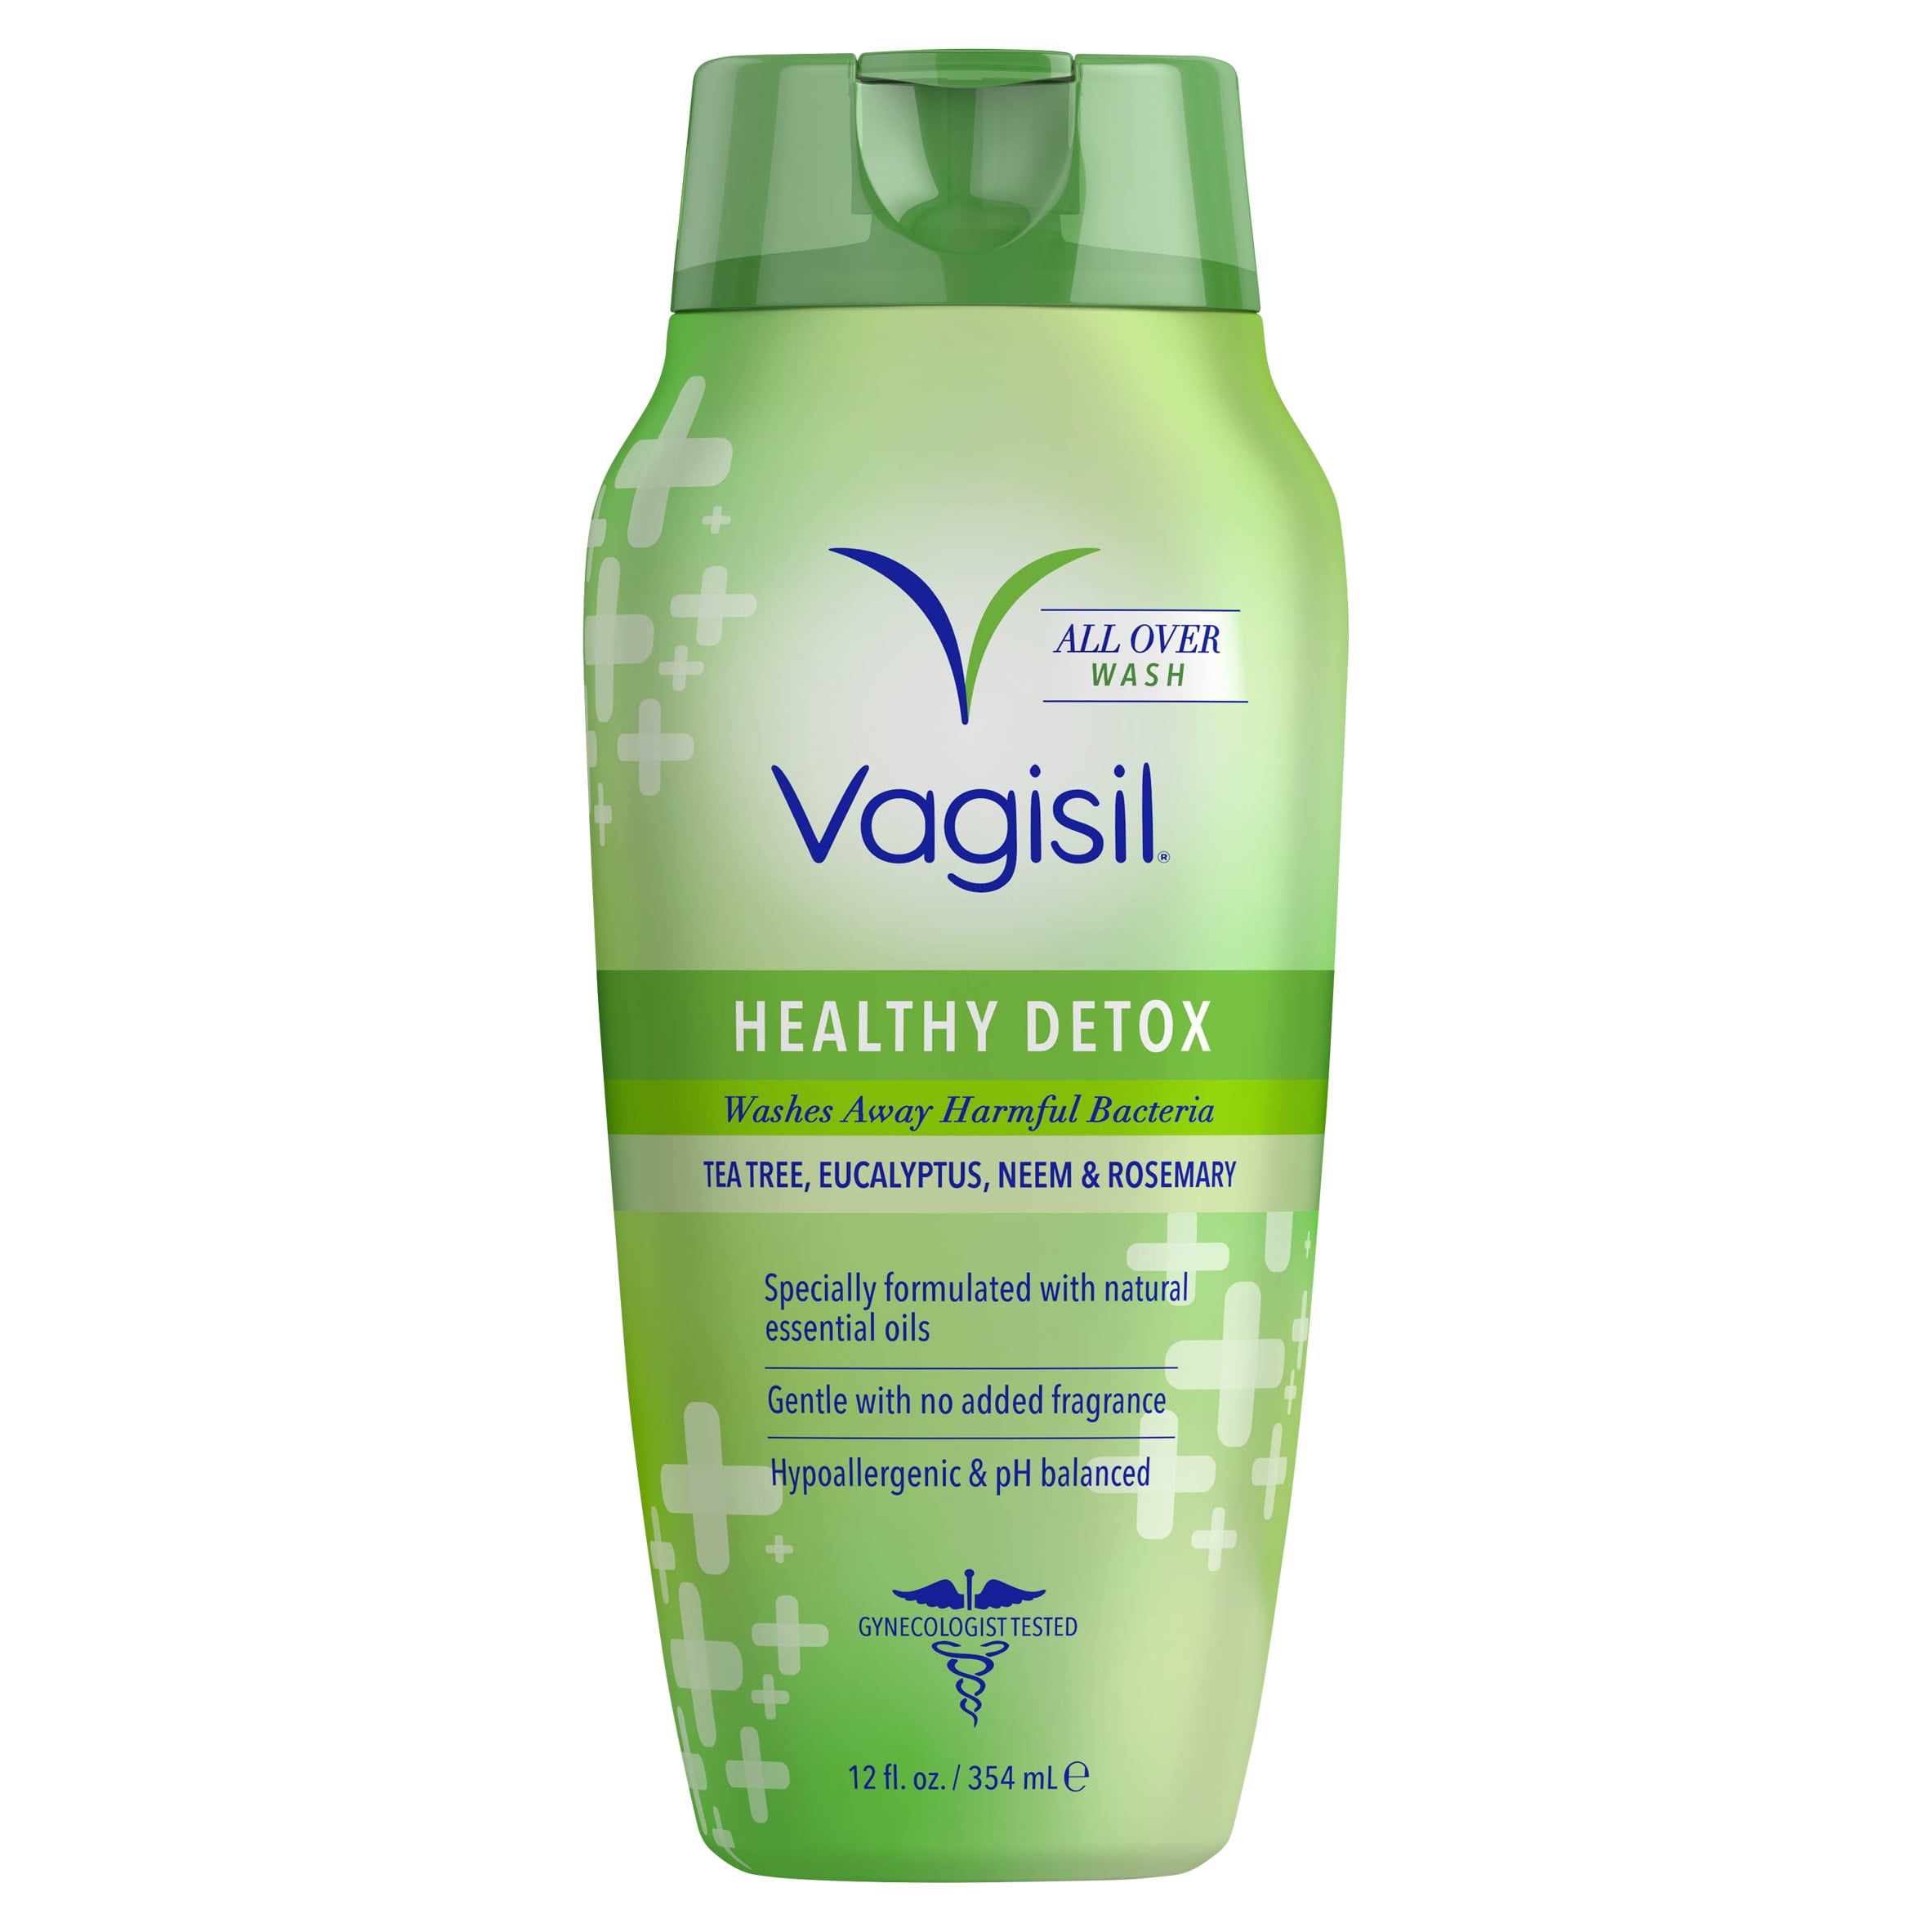 Vagisil Healthy Detox Daily Intimate Vaginal Feminine Wash, 12 fl. oz., 1 Pack